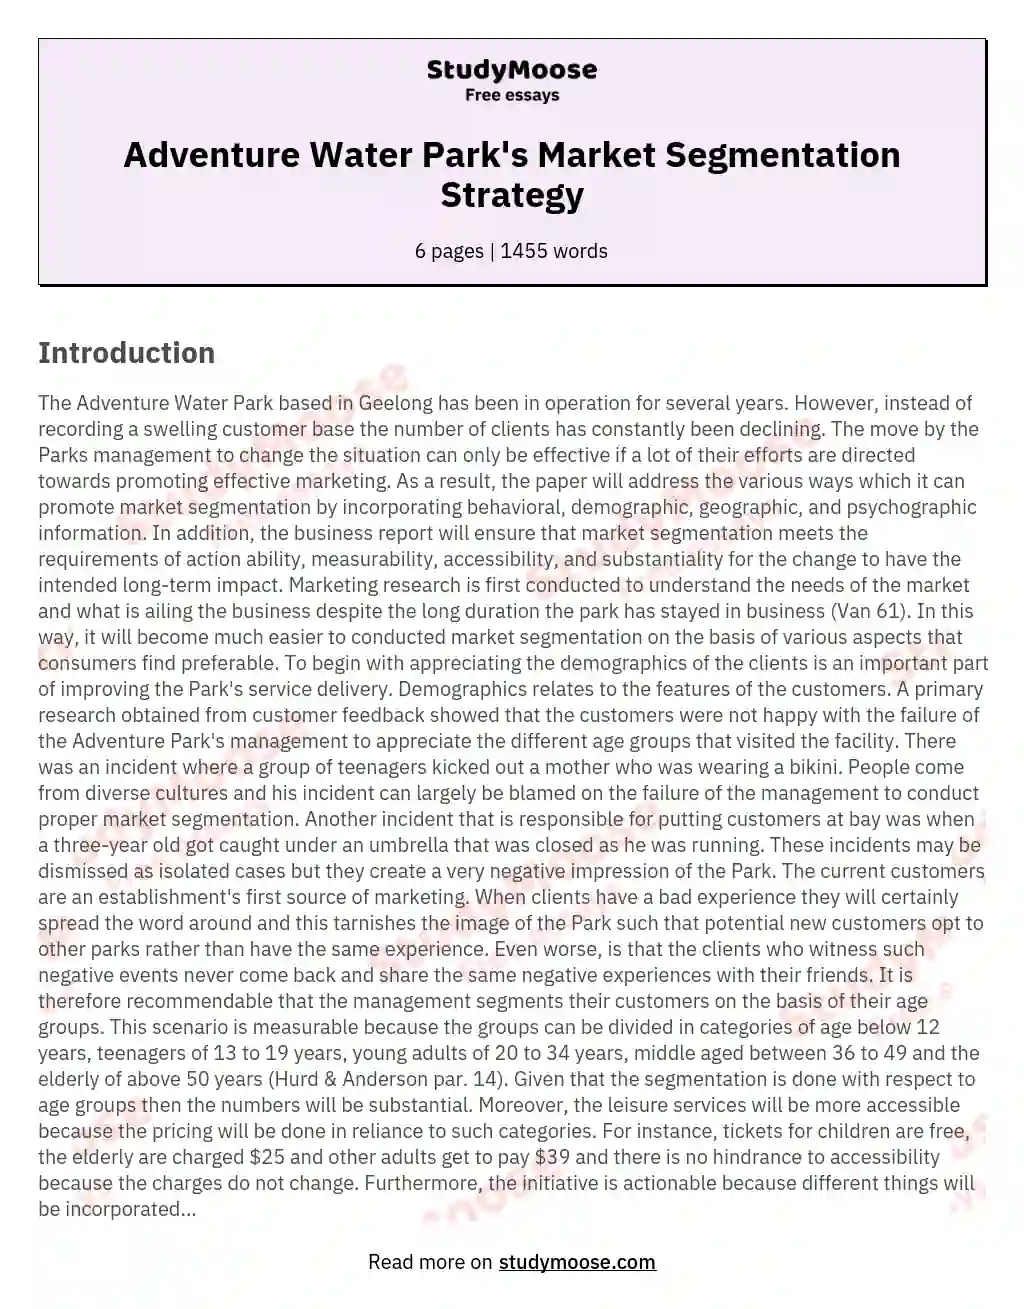 Adventure Water Park's Market Segmentation Strategy essay